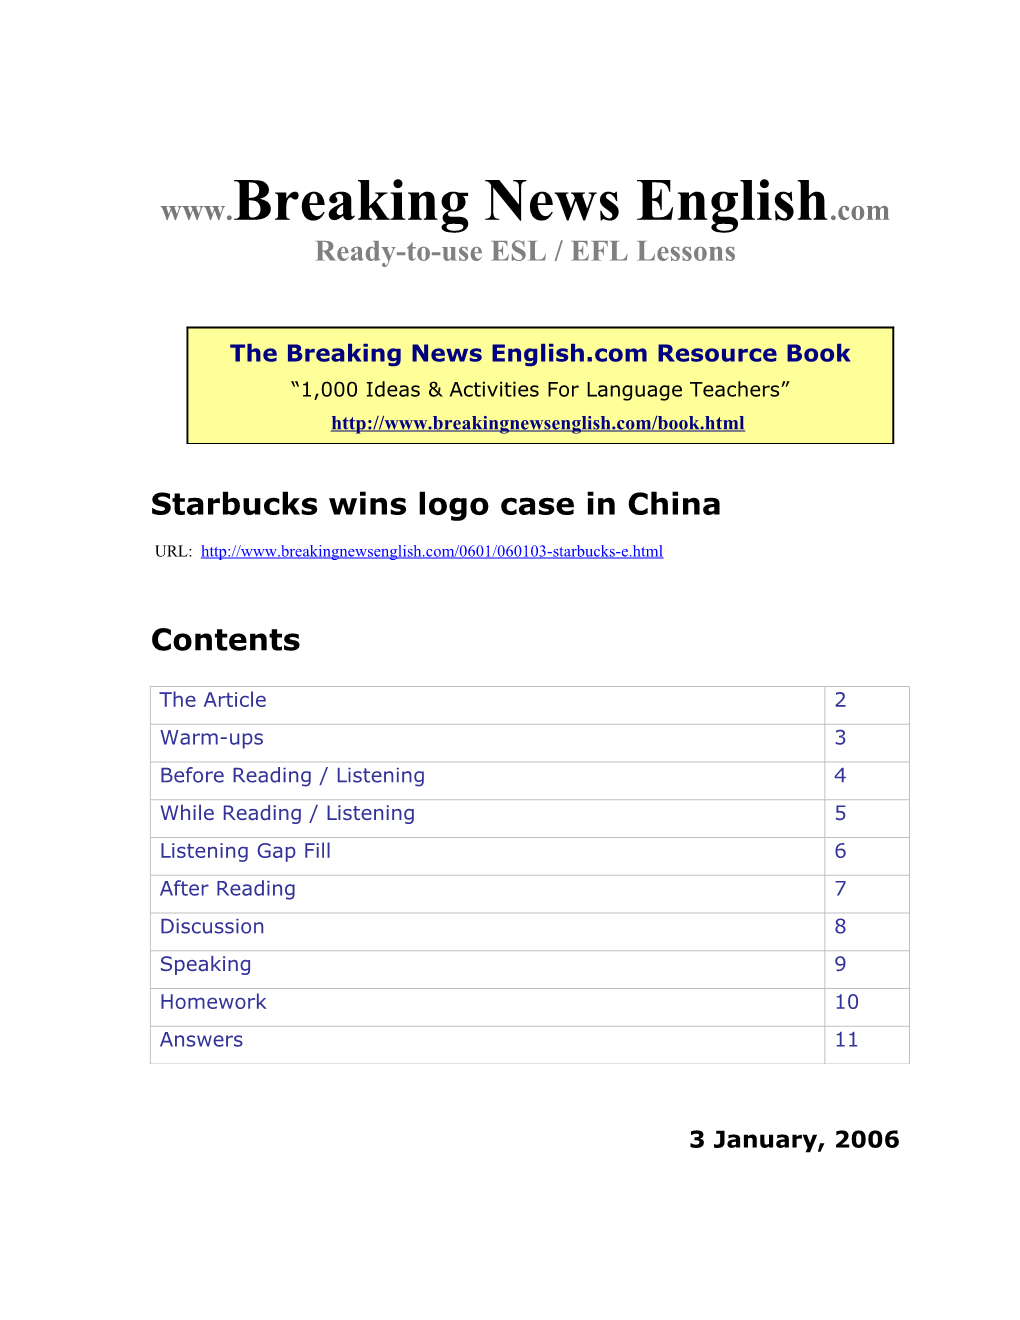 Starbucks Wins Logo Case in China